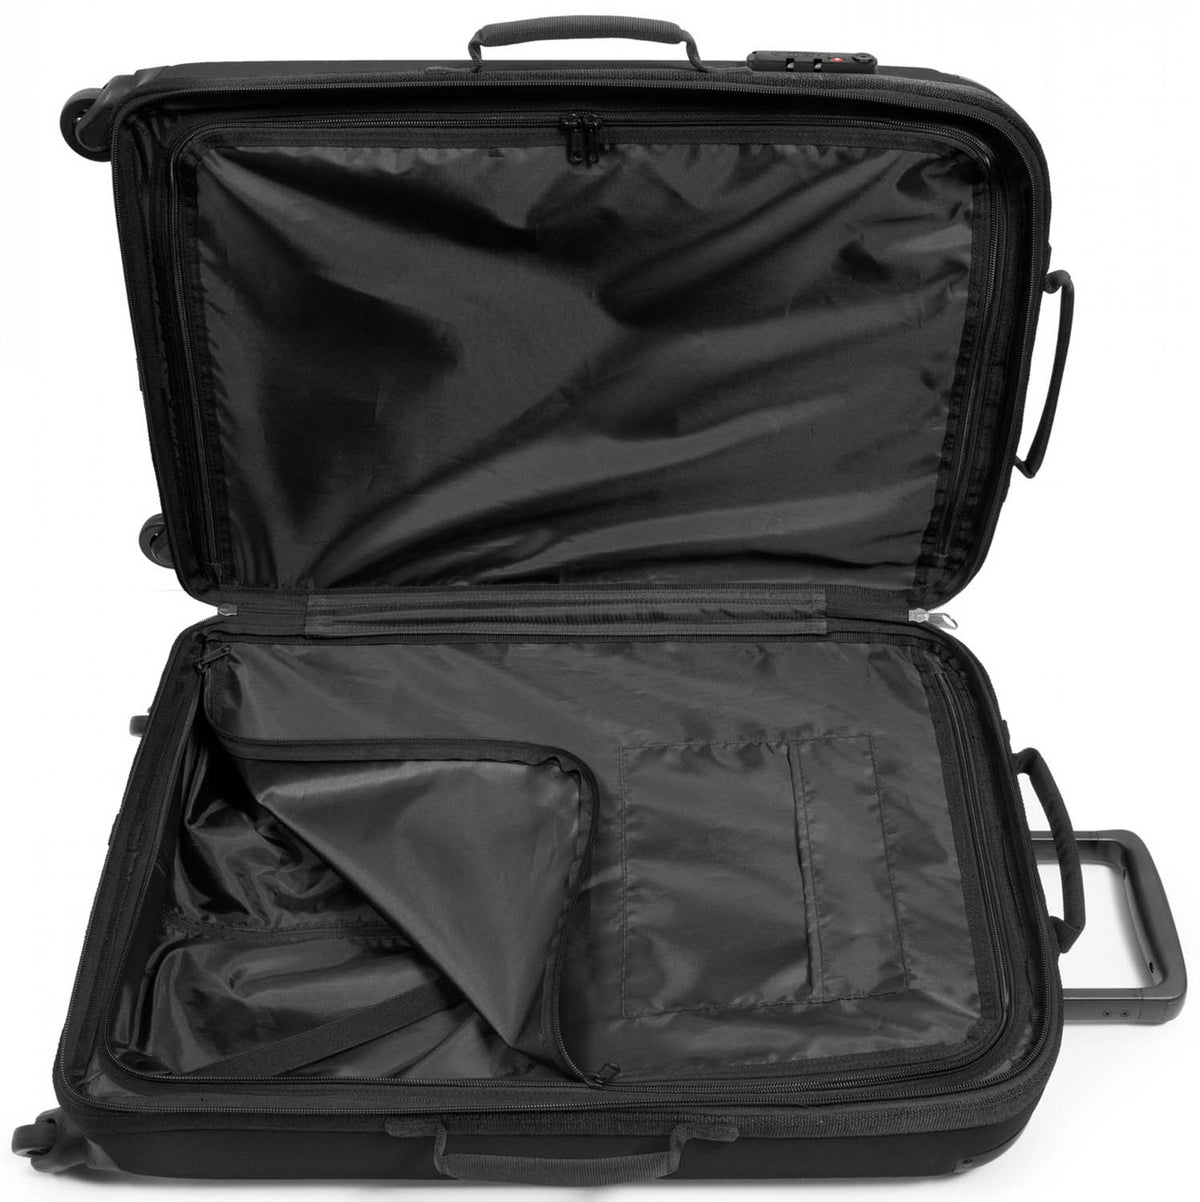 Eastpak Tranzshell M Suitcase - Black